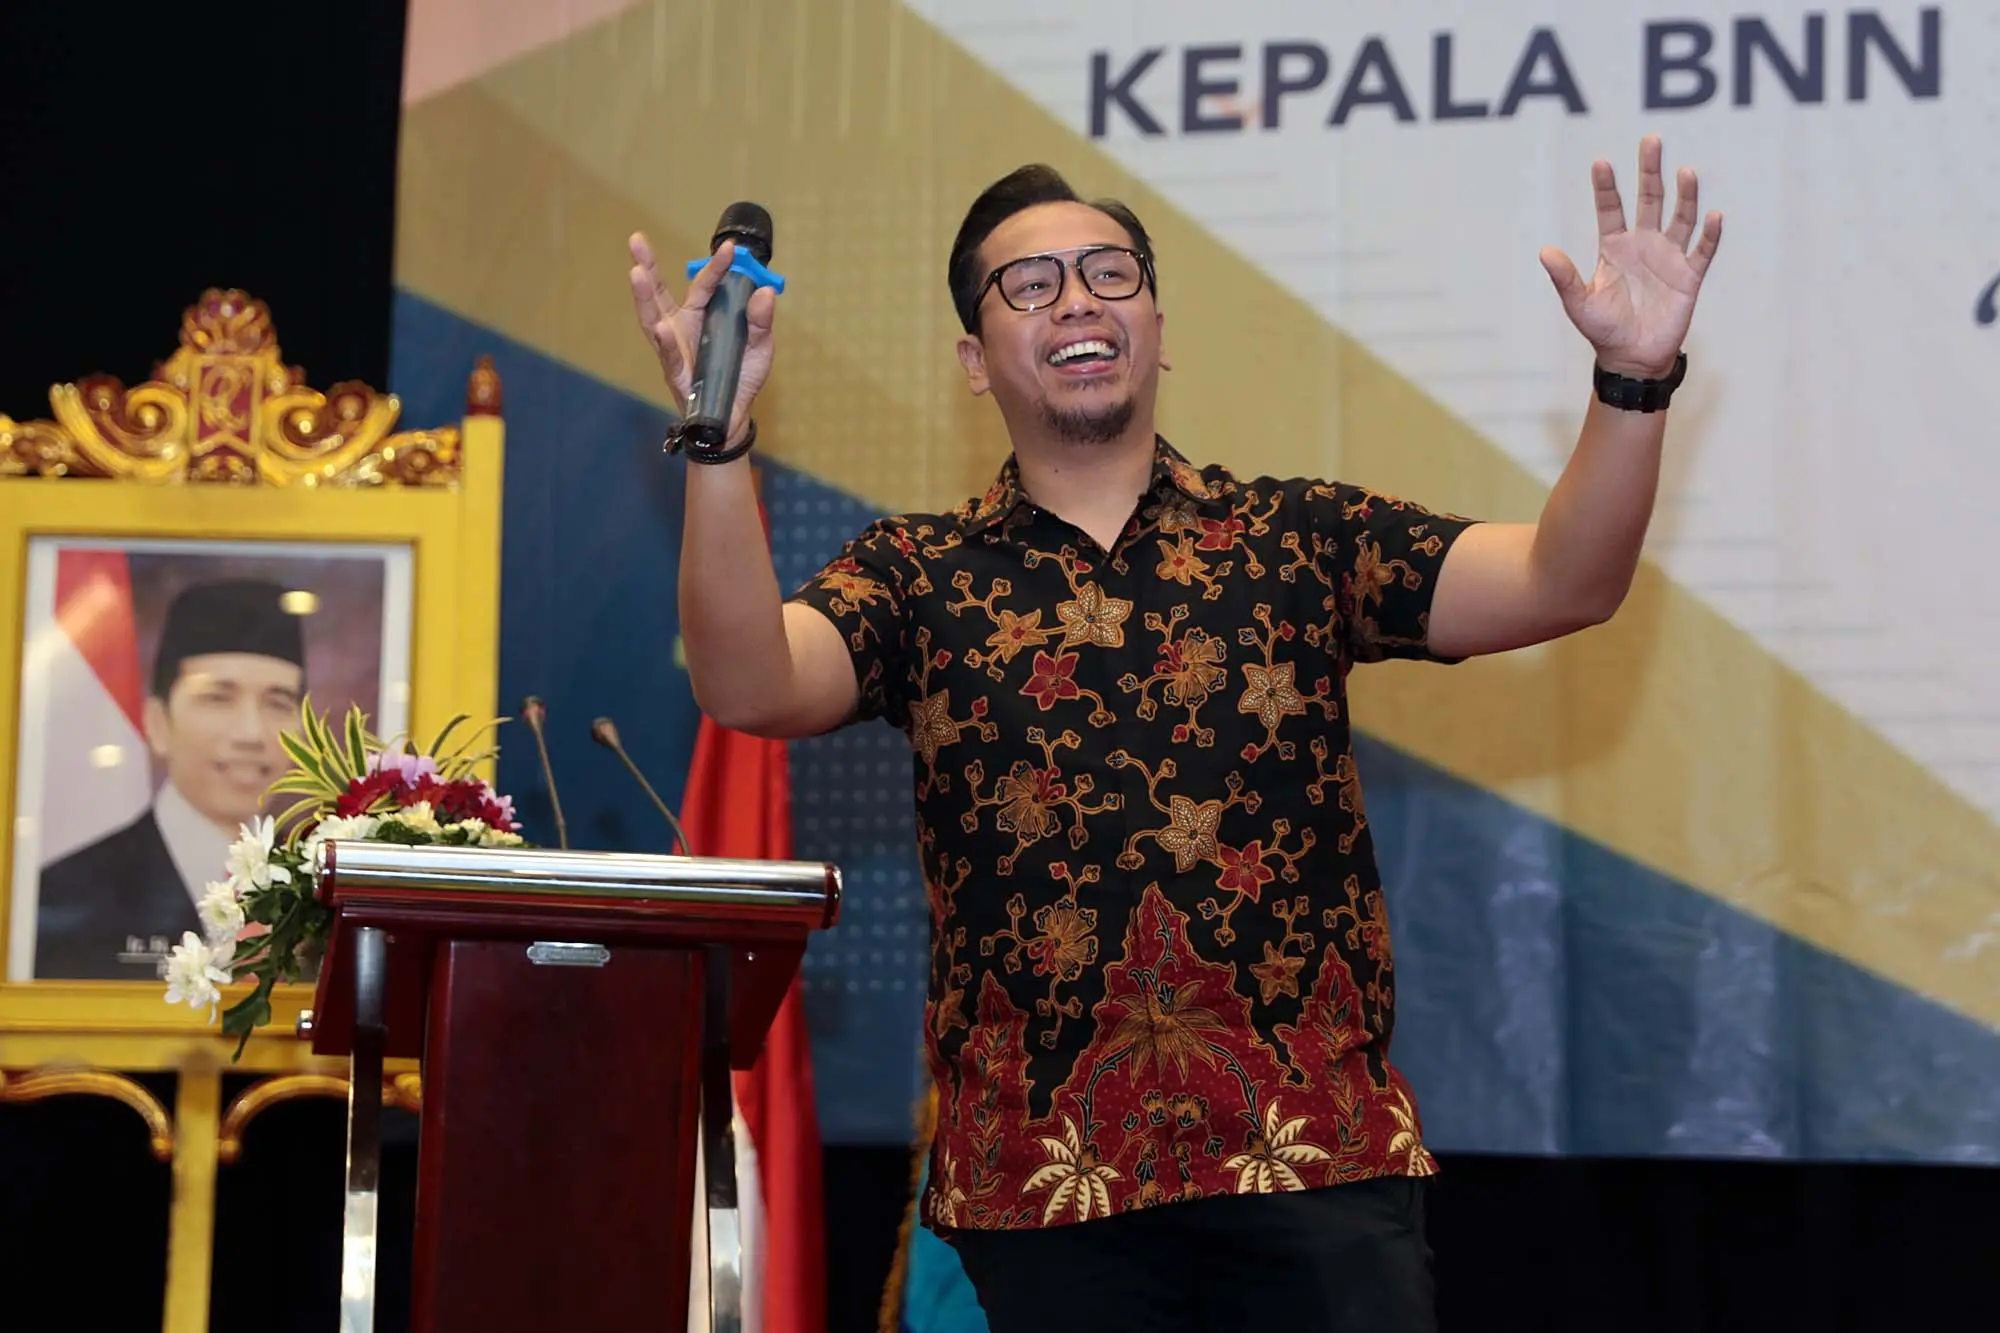 Sammy Simorangkir kini aktif menyuarakan bahaya narkoba. (Deki Prayoga/Bintang.com)